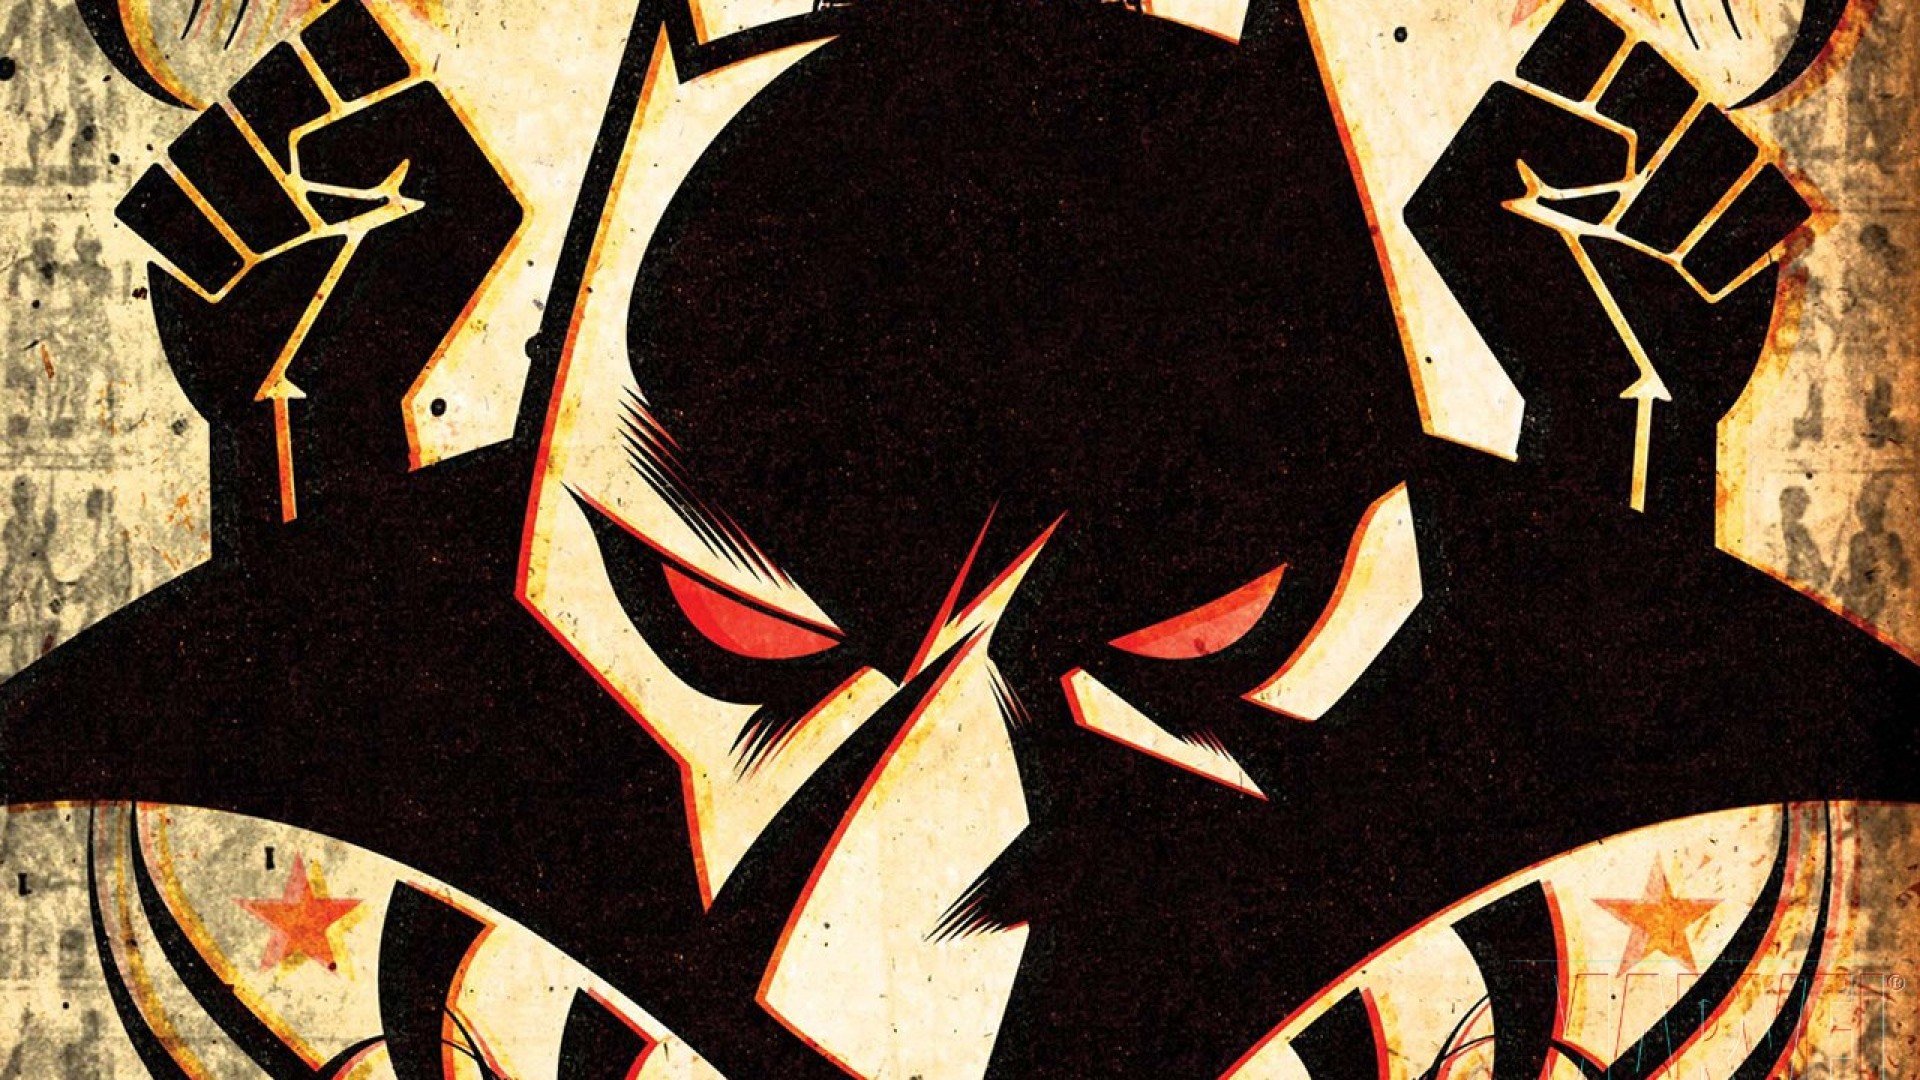 Best Black Panther (Marvel) wallpaper ID:341858 for High Resolution hd 1080p desktop